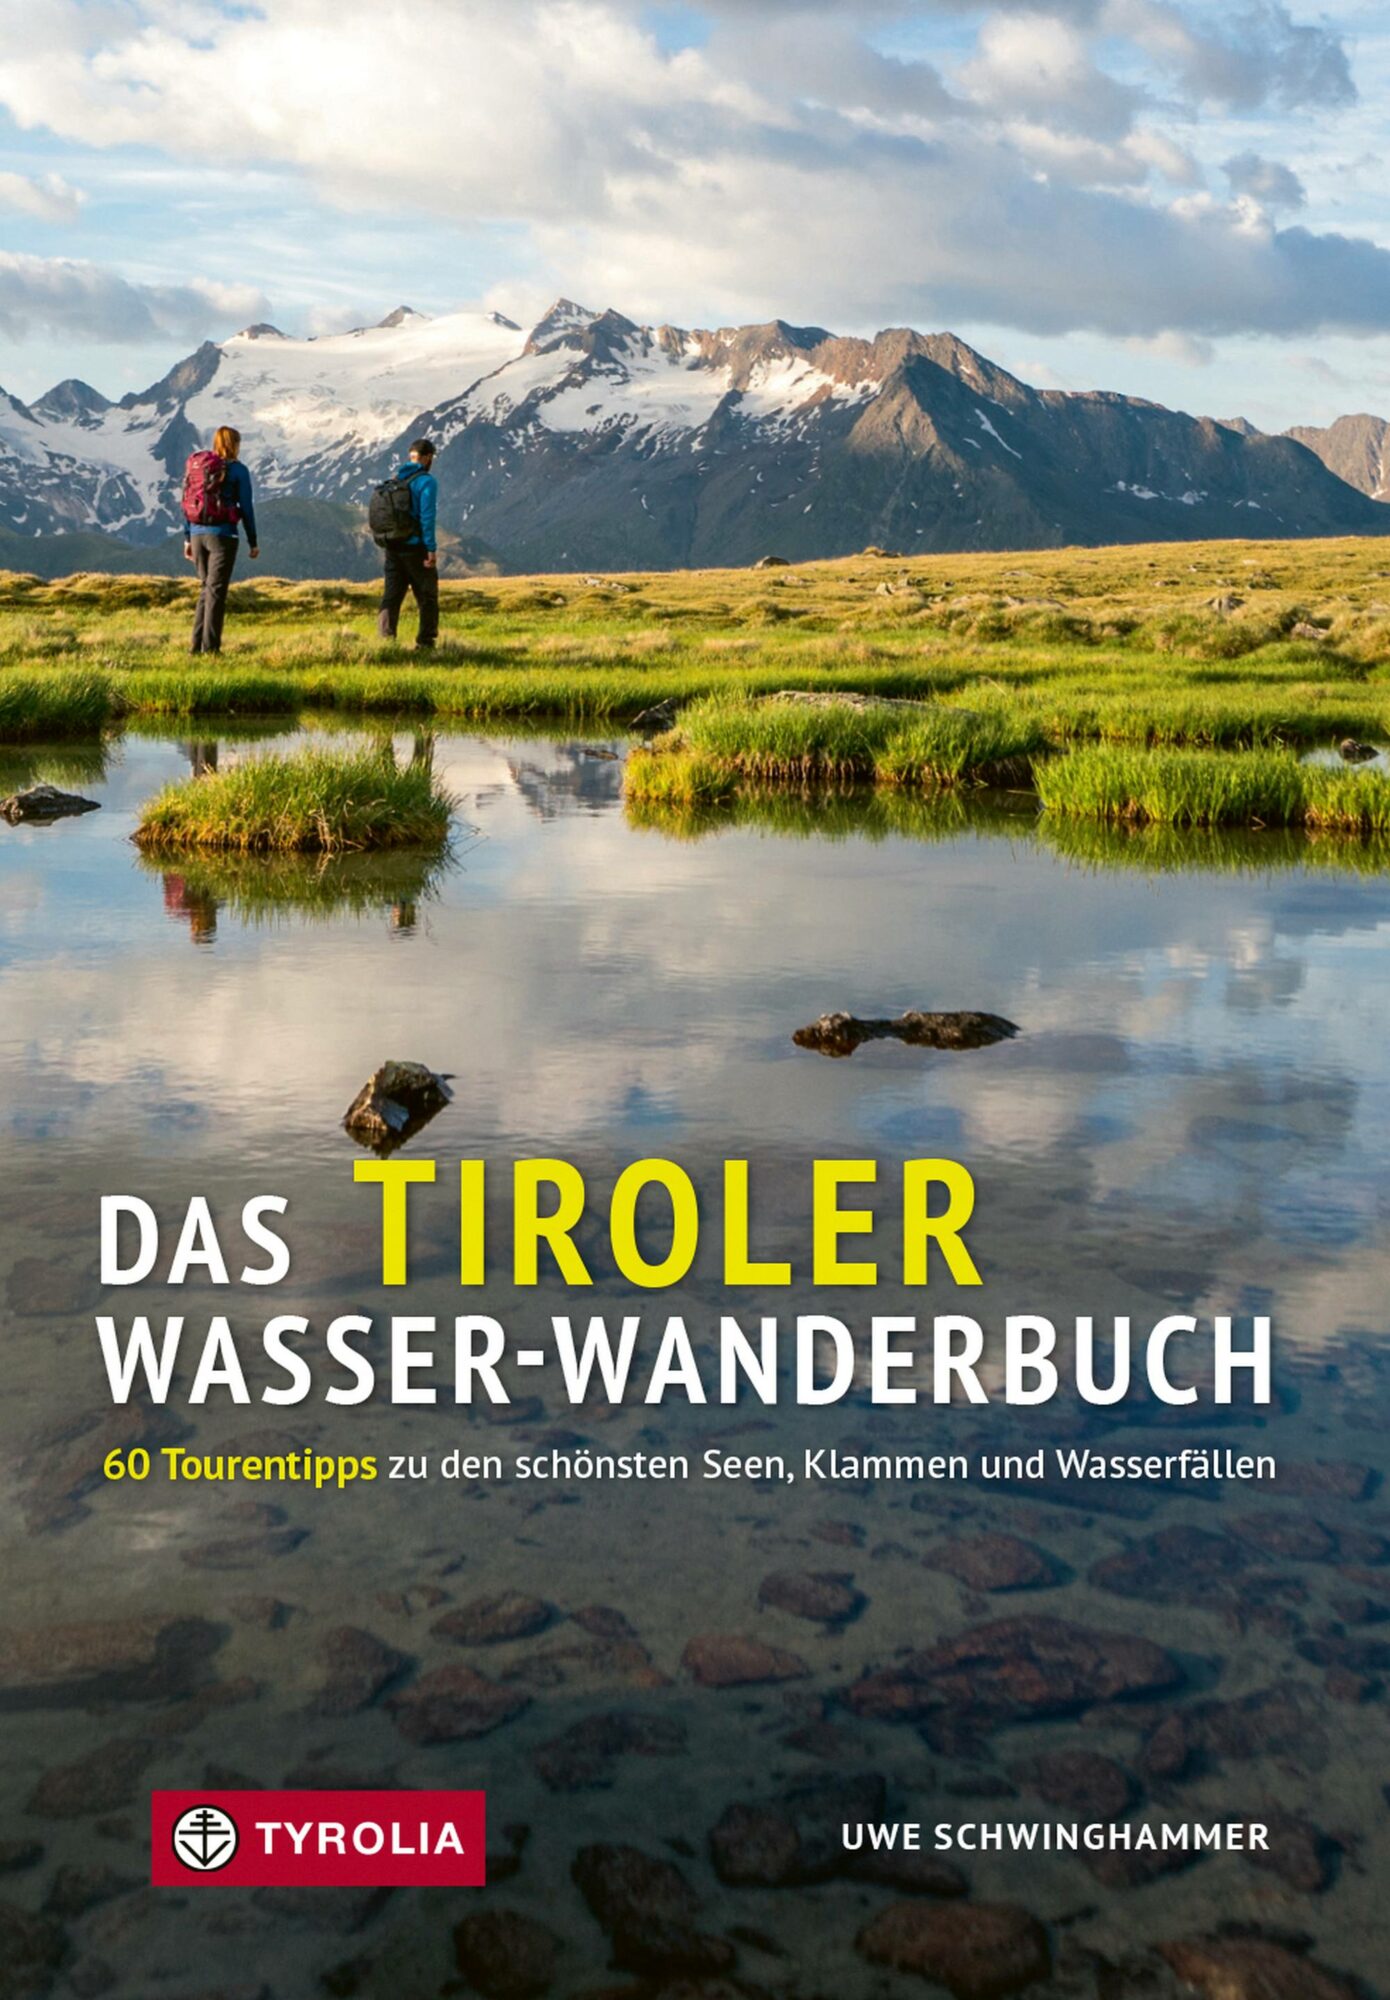 Tiroler Wasser-Wanderbuch (c) Tyrolia Verlag